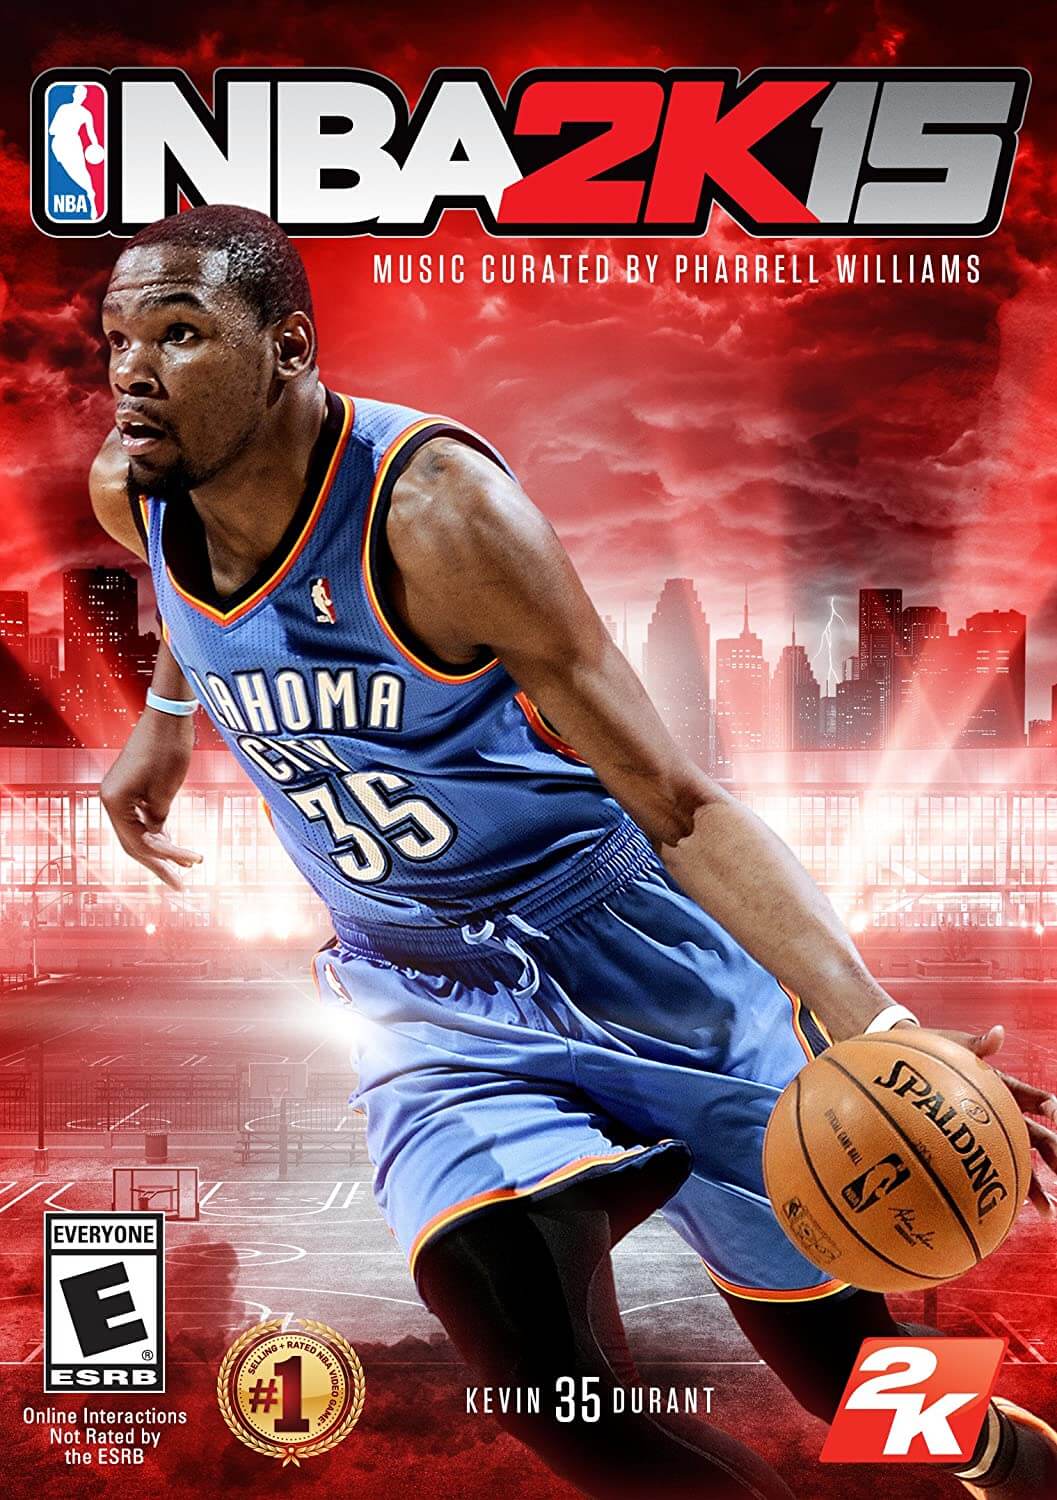 NBA 2K15 Cover